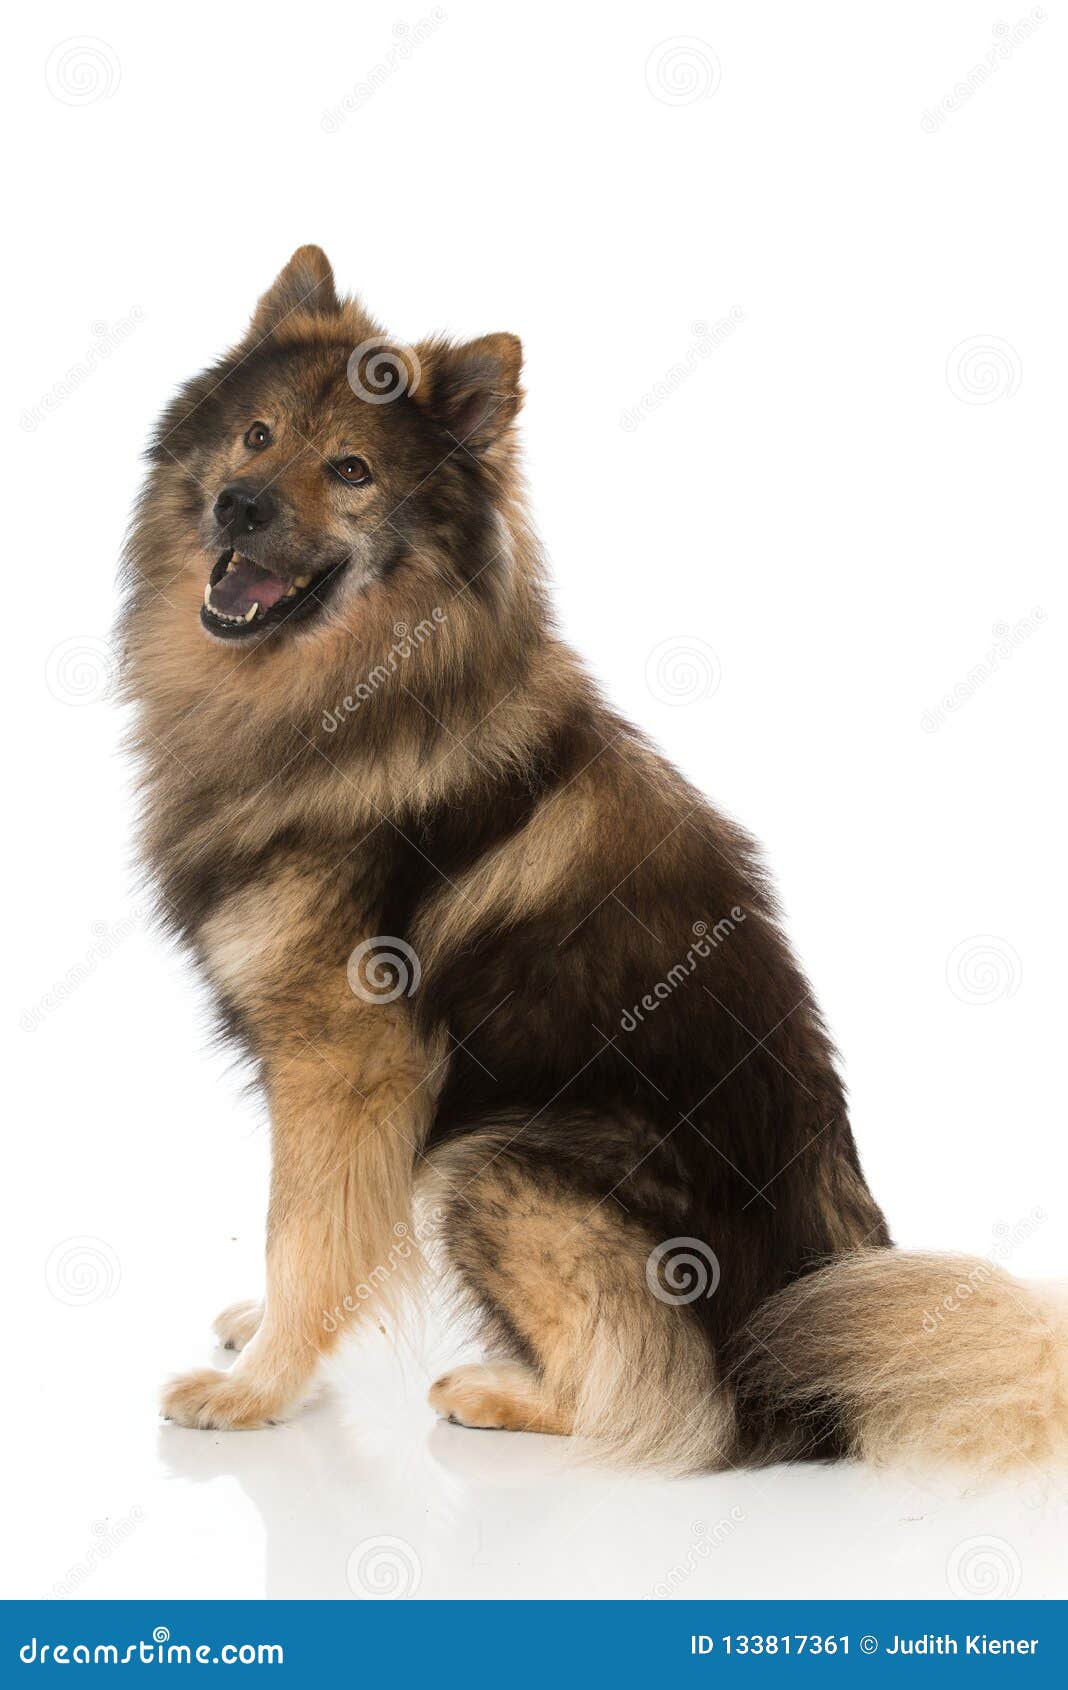 Eurasier Dog Sitting On White Background Stock Image Image Of Looking Purebred 133817361